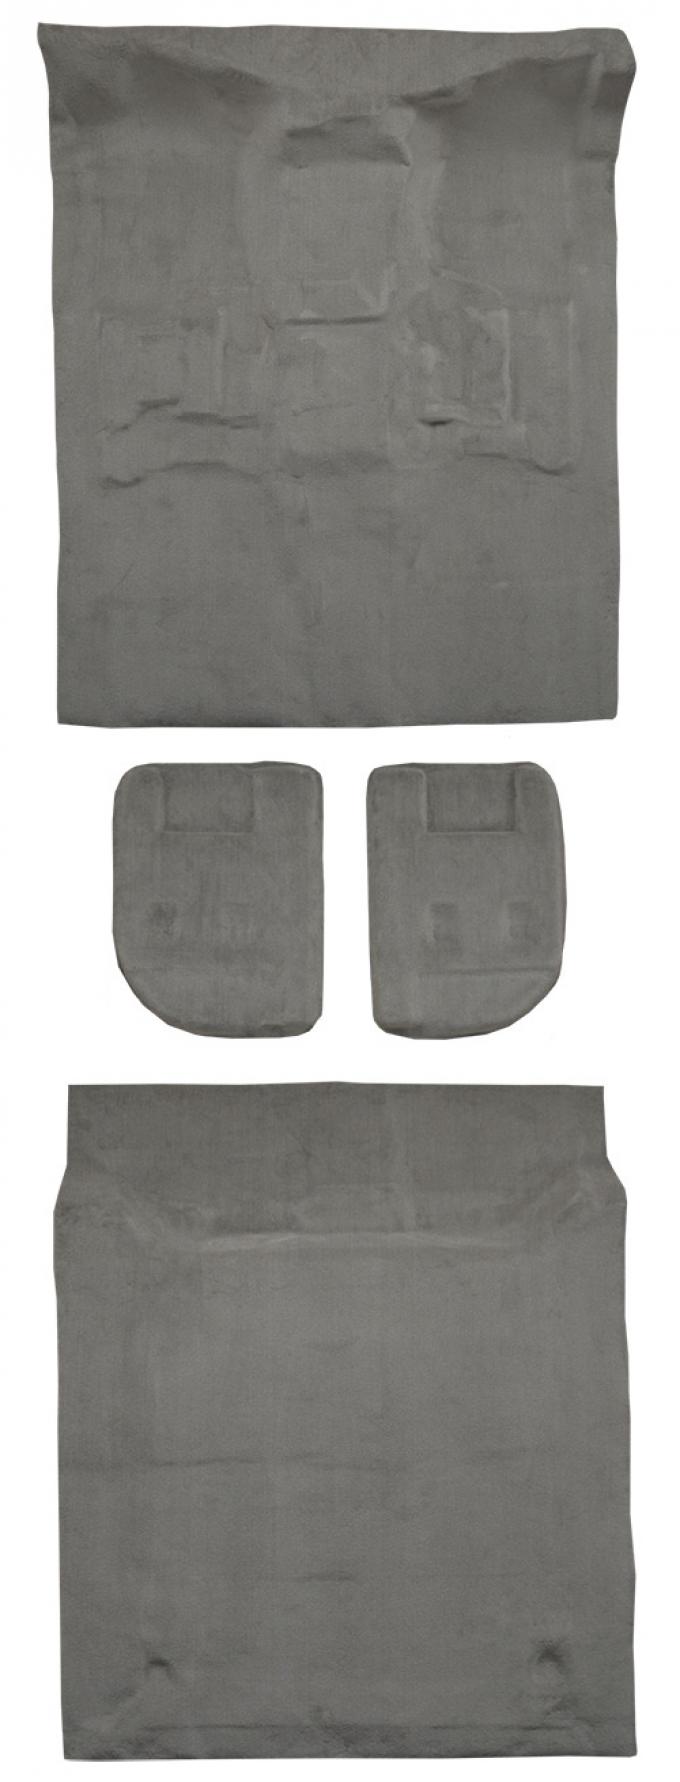 ACC 2007-2009 GMC Yukon XL 1500 4DR w/2nd Row Bucket Seat Mount Cover w/o Heel Pad Complete Cutpile Carpet